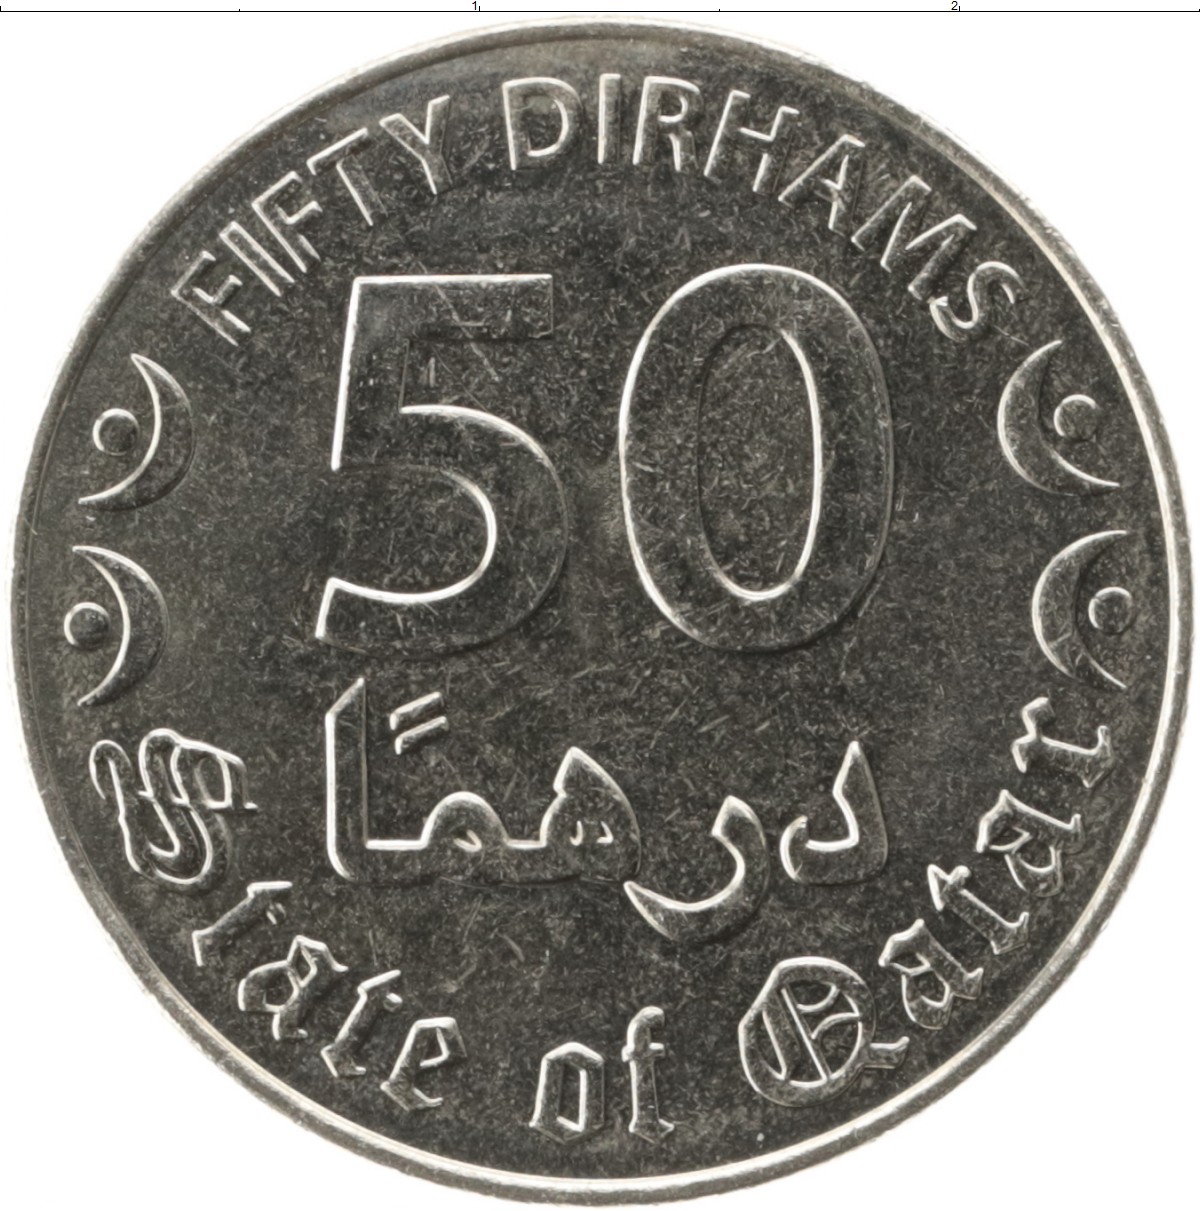 18 дирхам. Монеты Катара. Дирхамы монеты. Монета Катар 2020 года. Арабская монета State of Qatar.